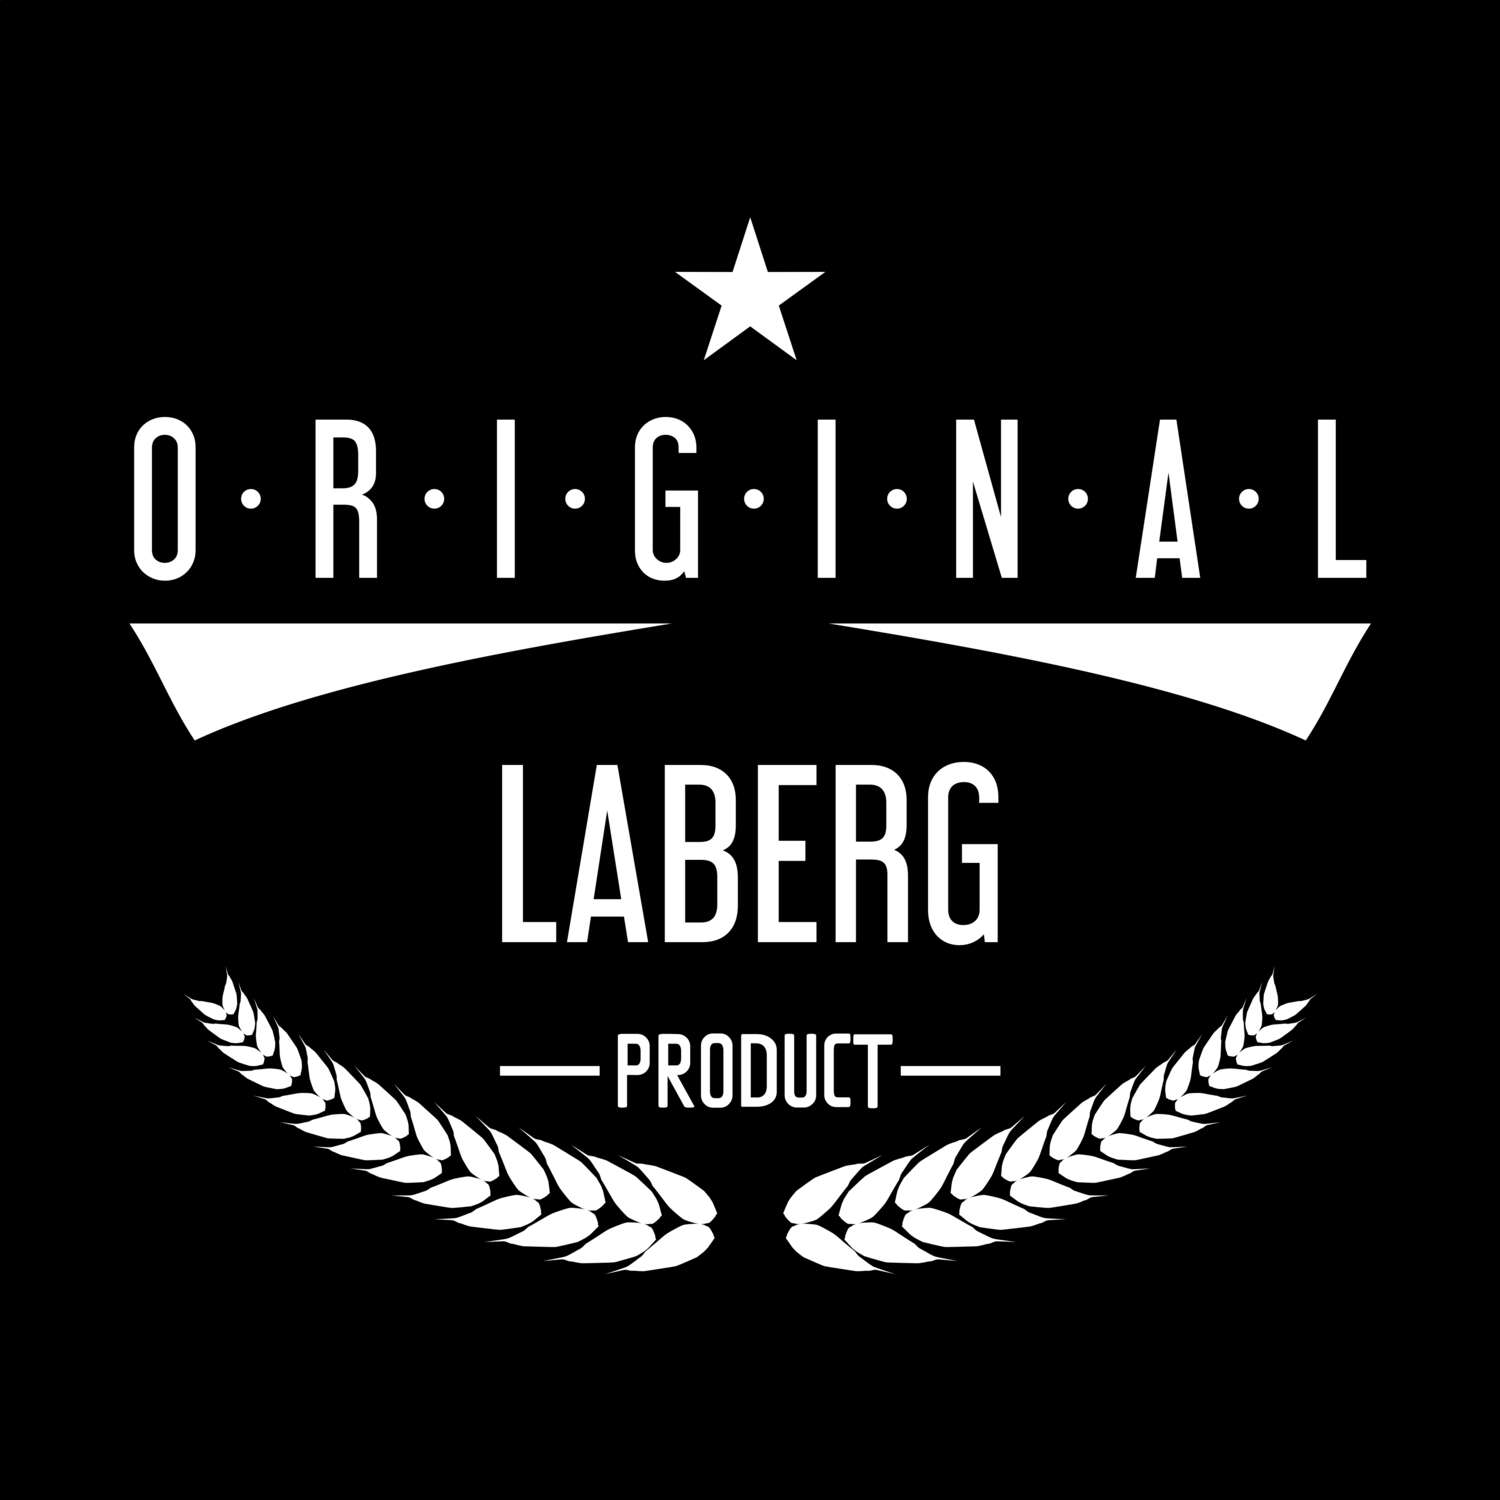 Laberg T-Shirt »Original Product«